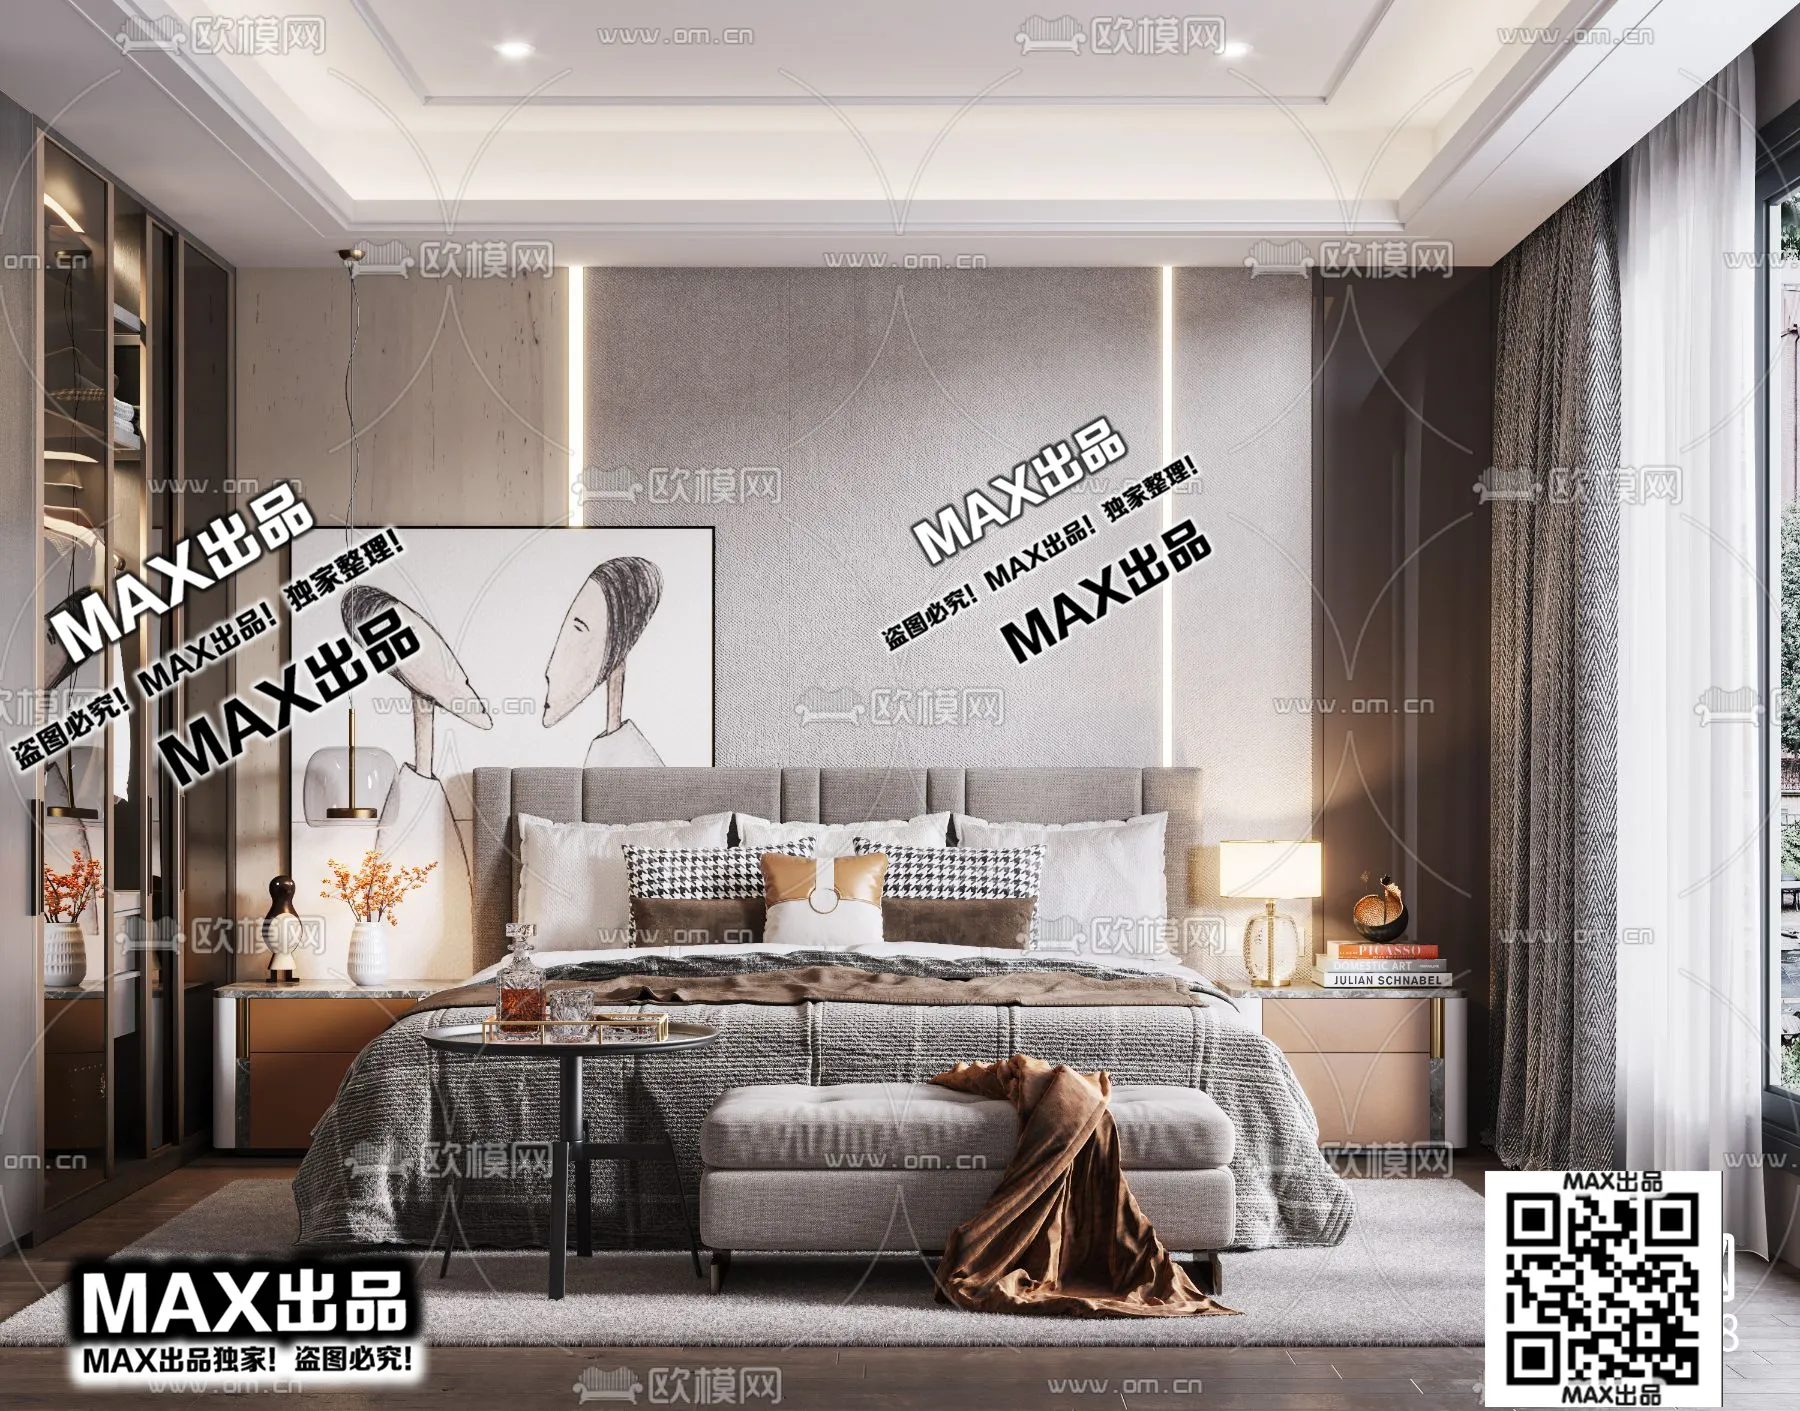 3DS MAX SCENES – LIVING ROOM – 004